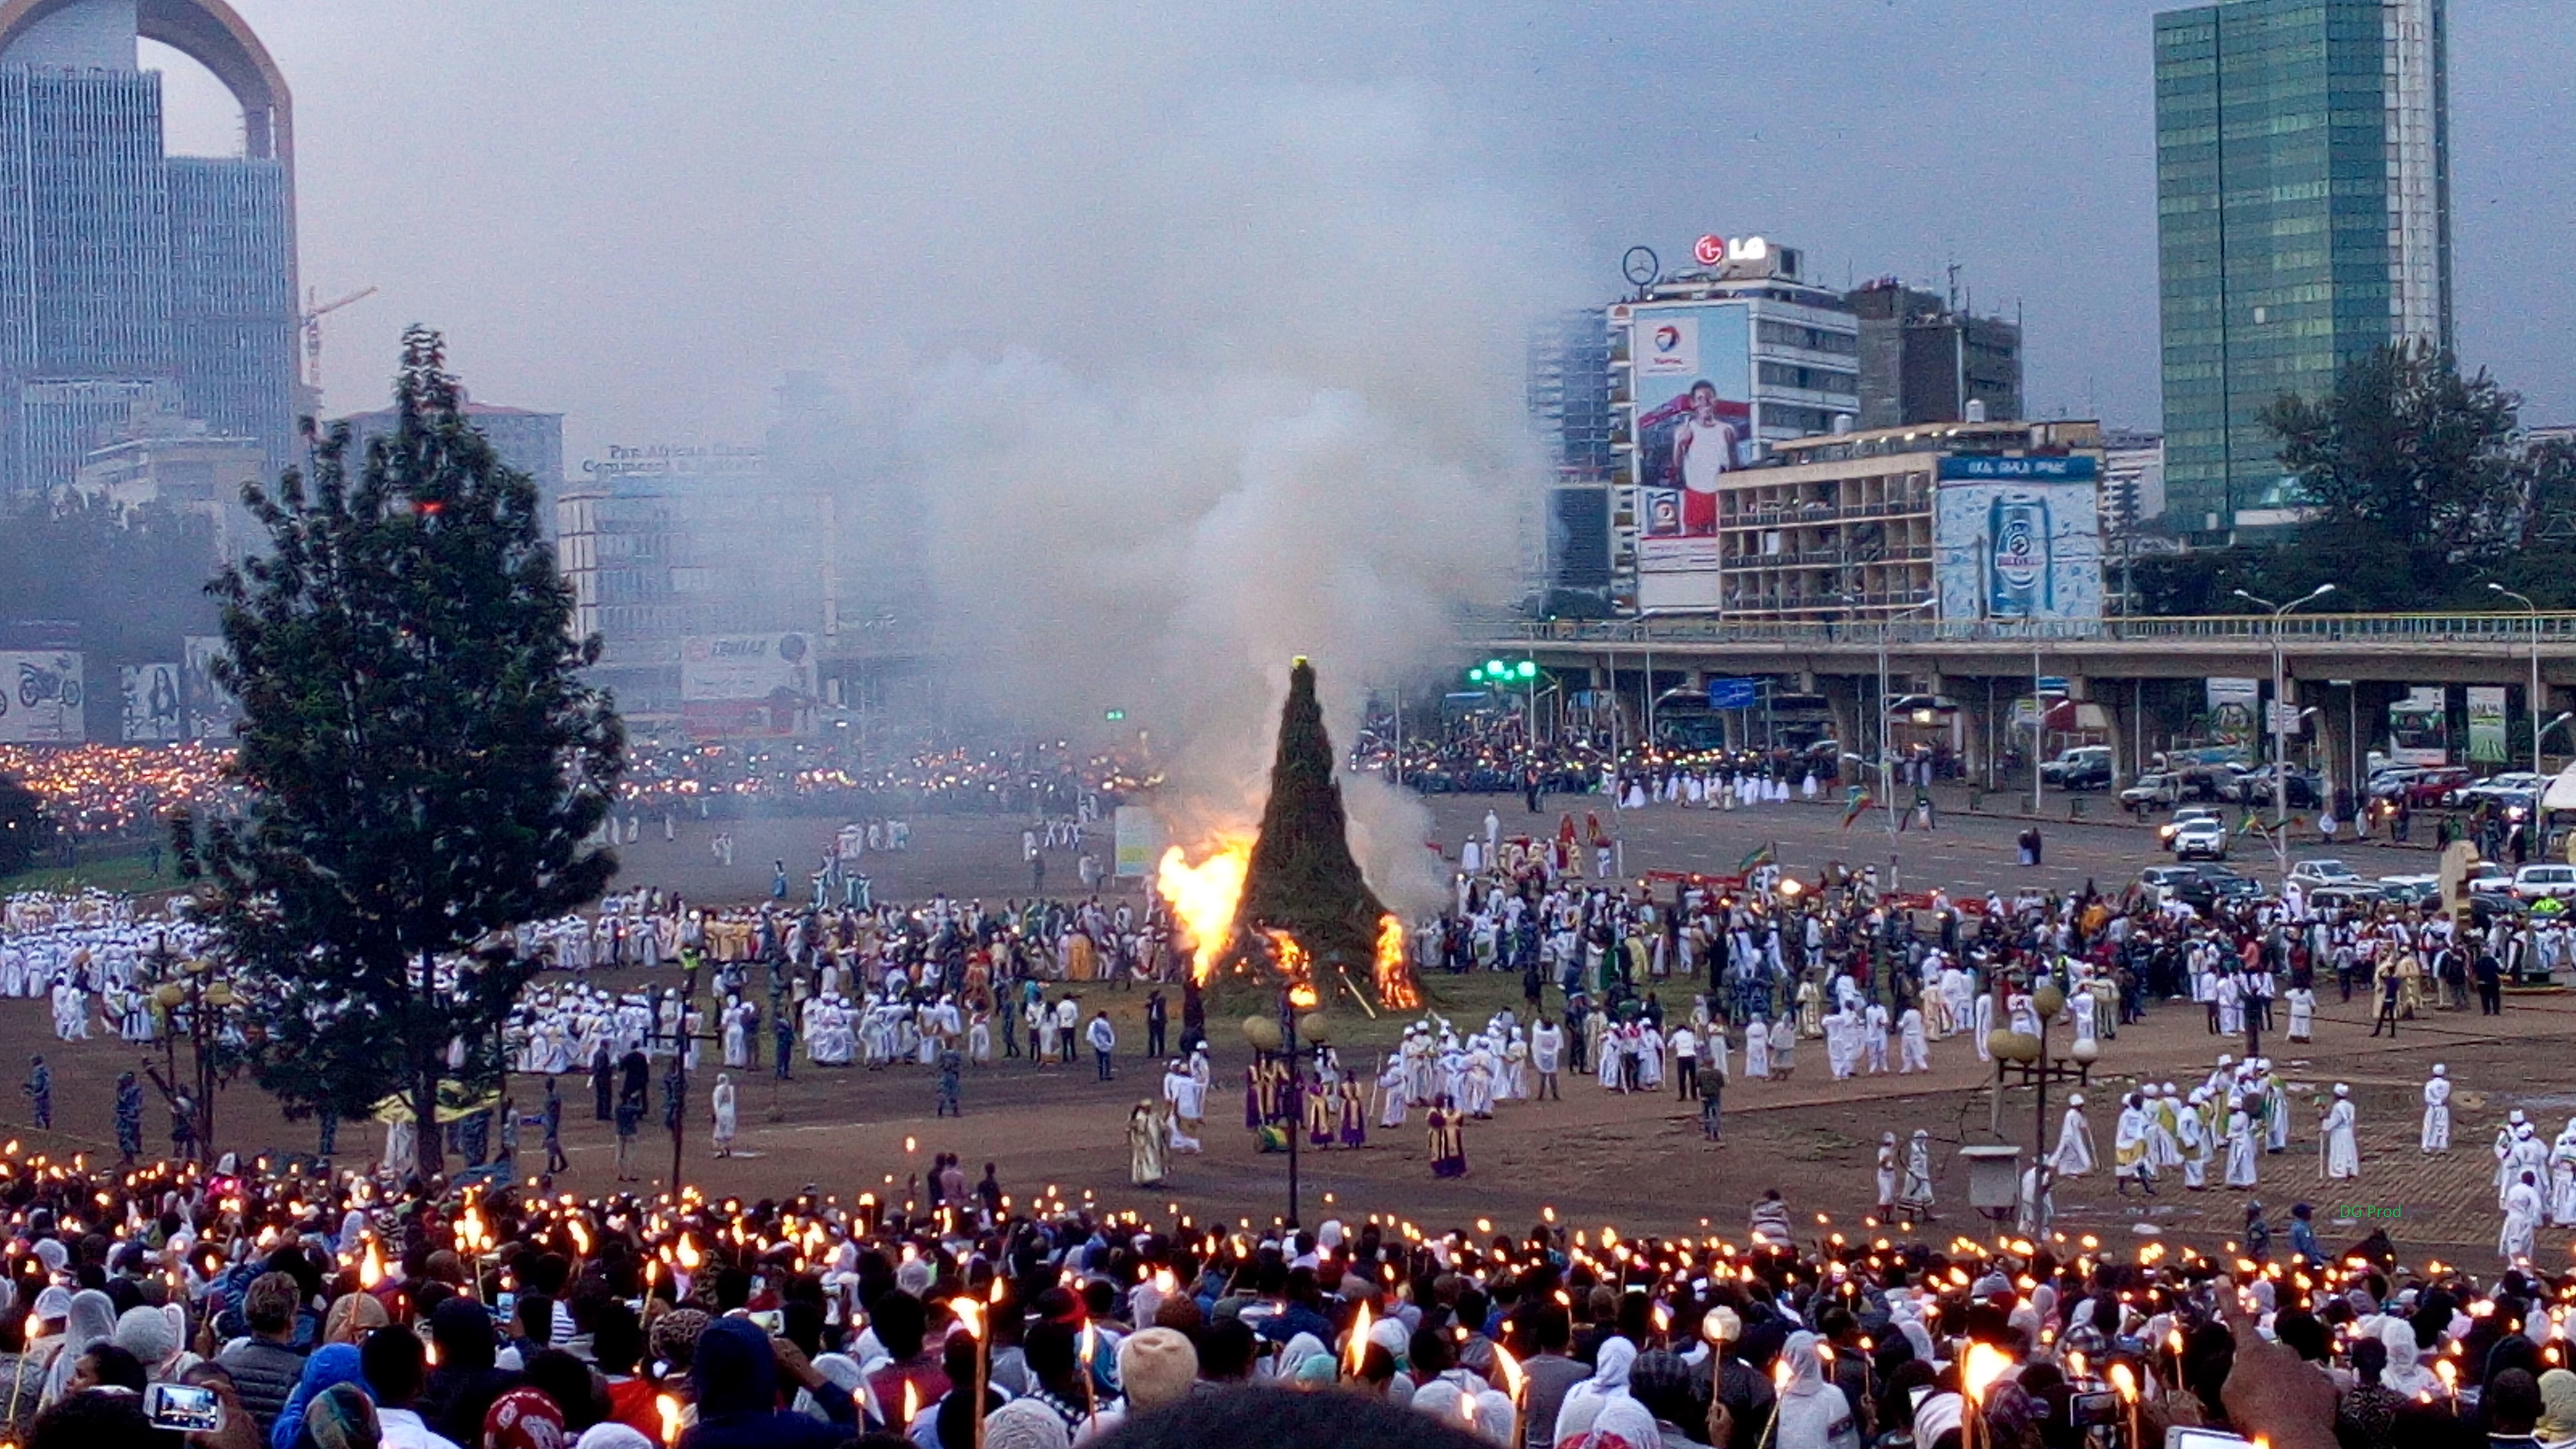 Shadow of war hangs over Ethiopia's Meskel festival celebrations